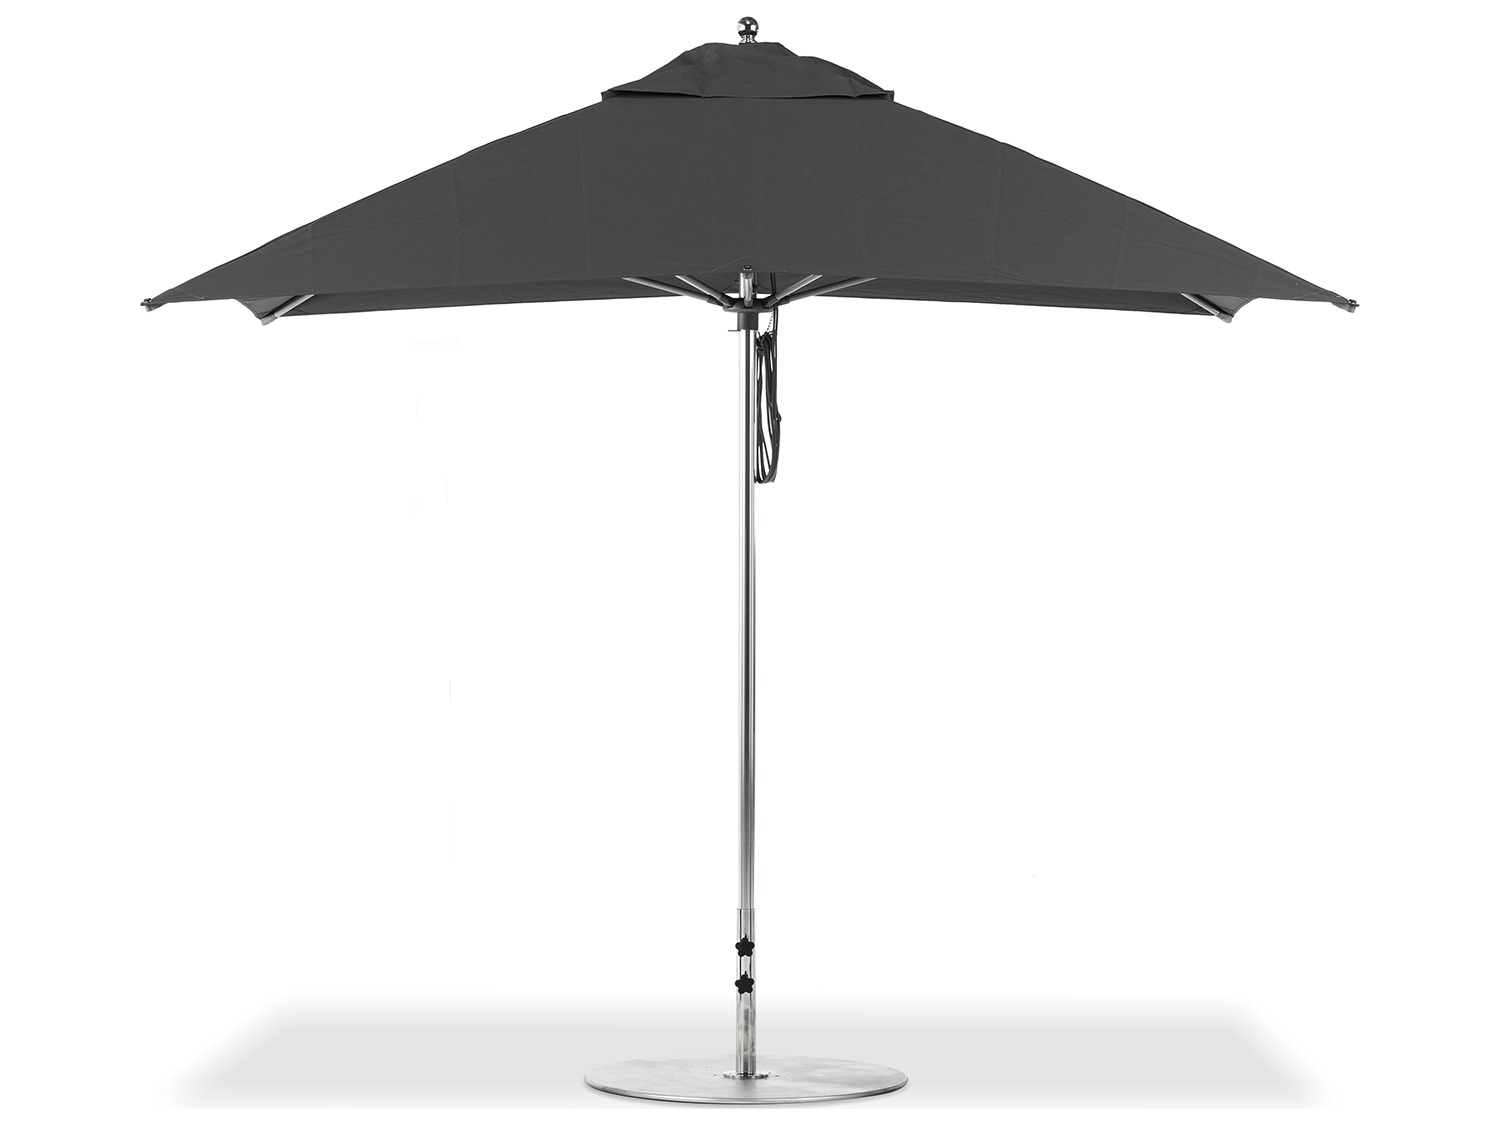 10' G-Series Monterey Giant Square Fiberglass Market Umbrella